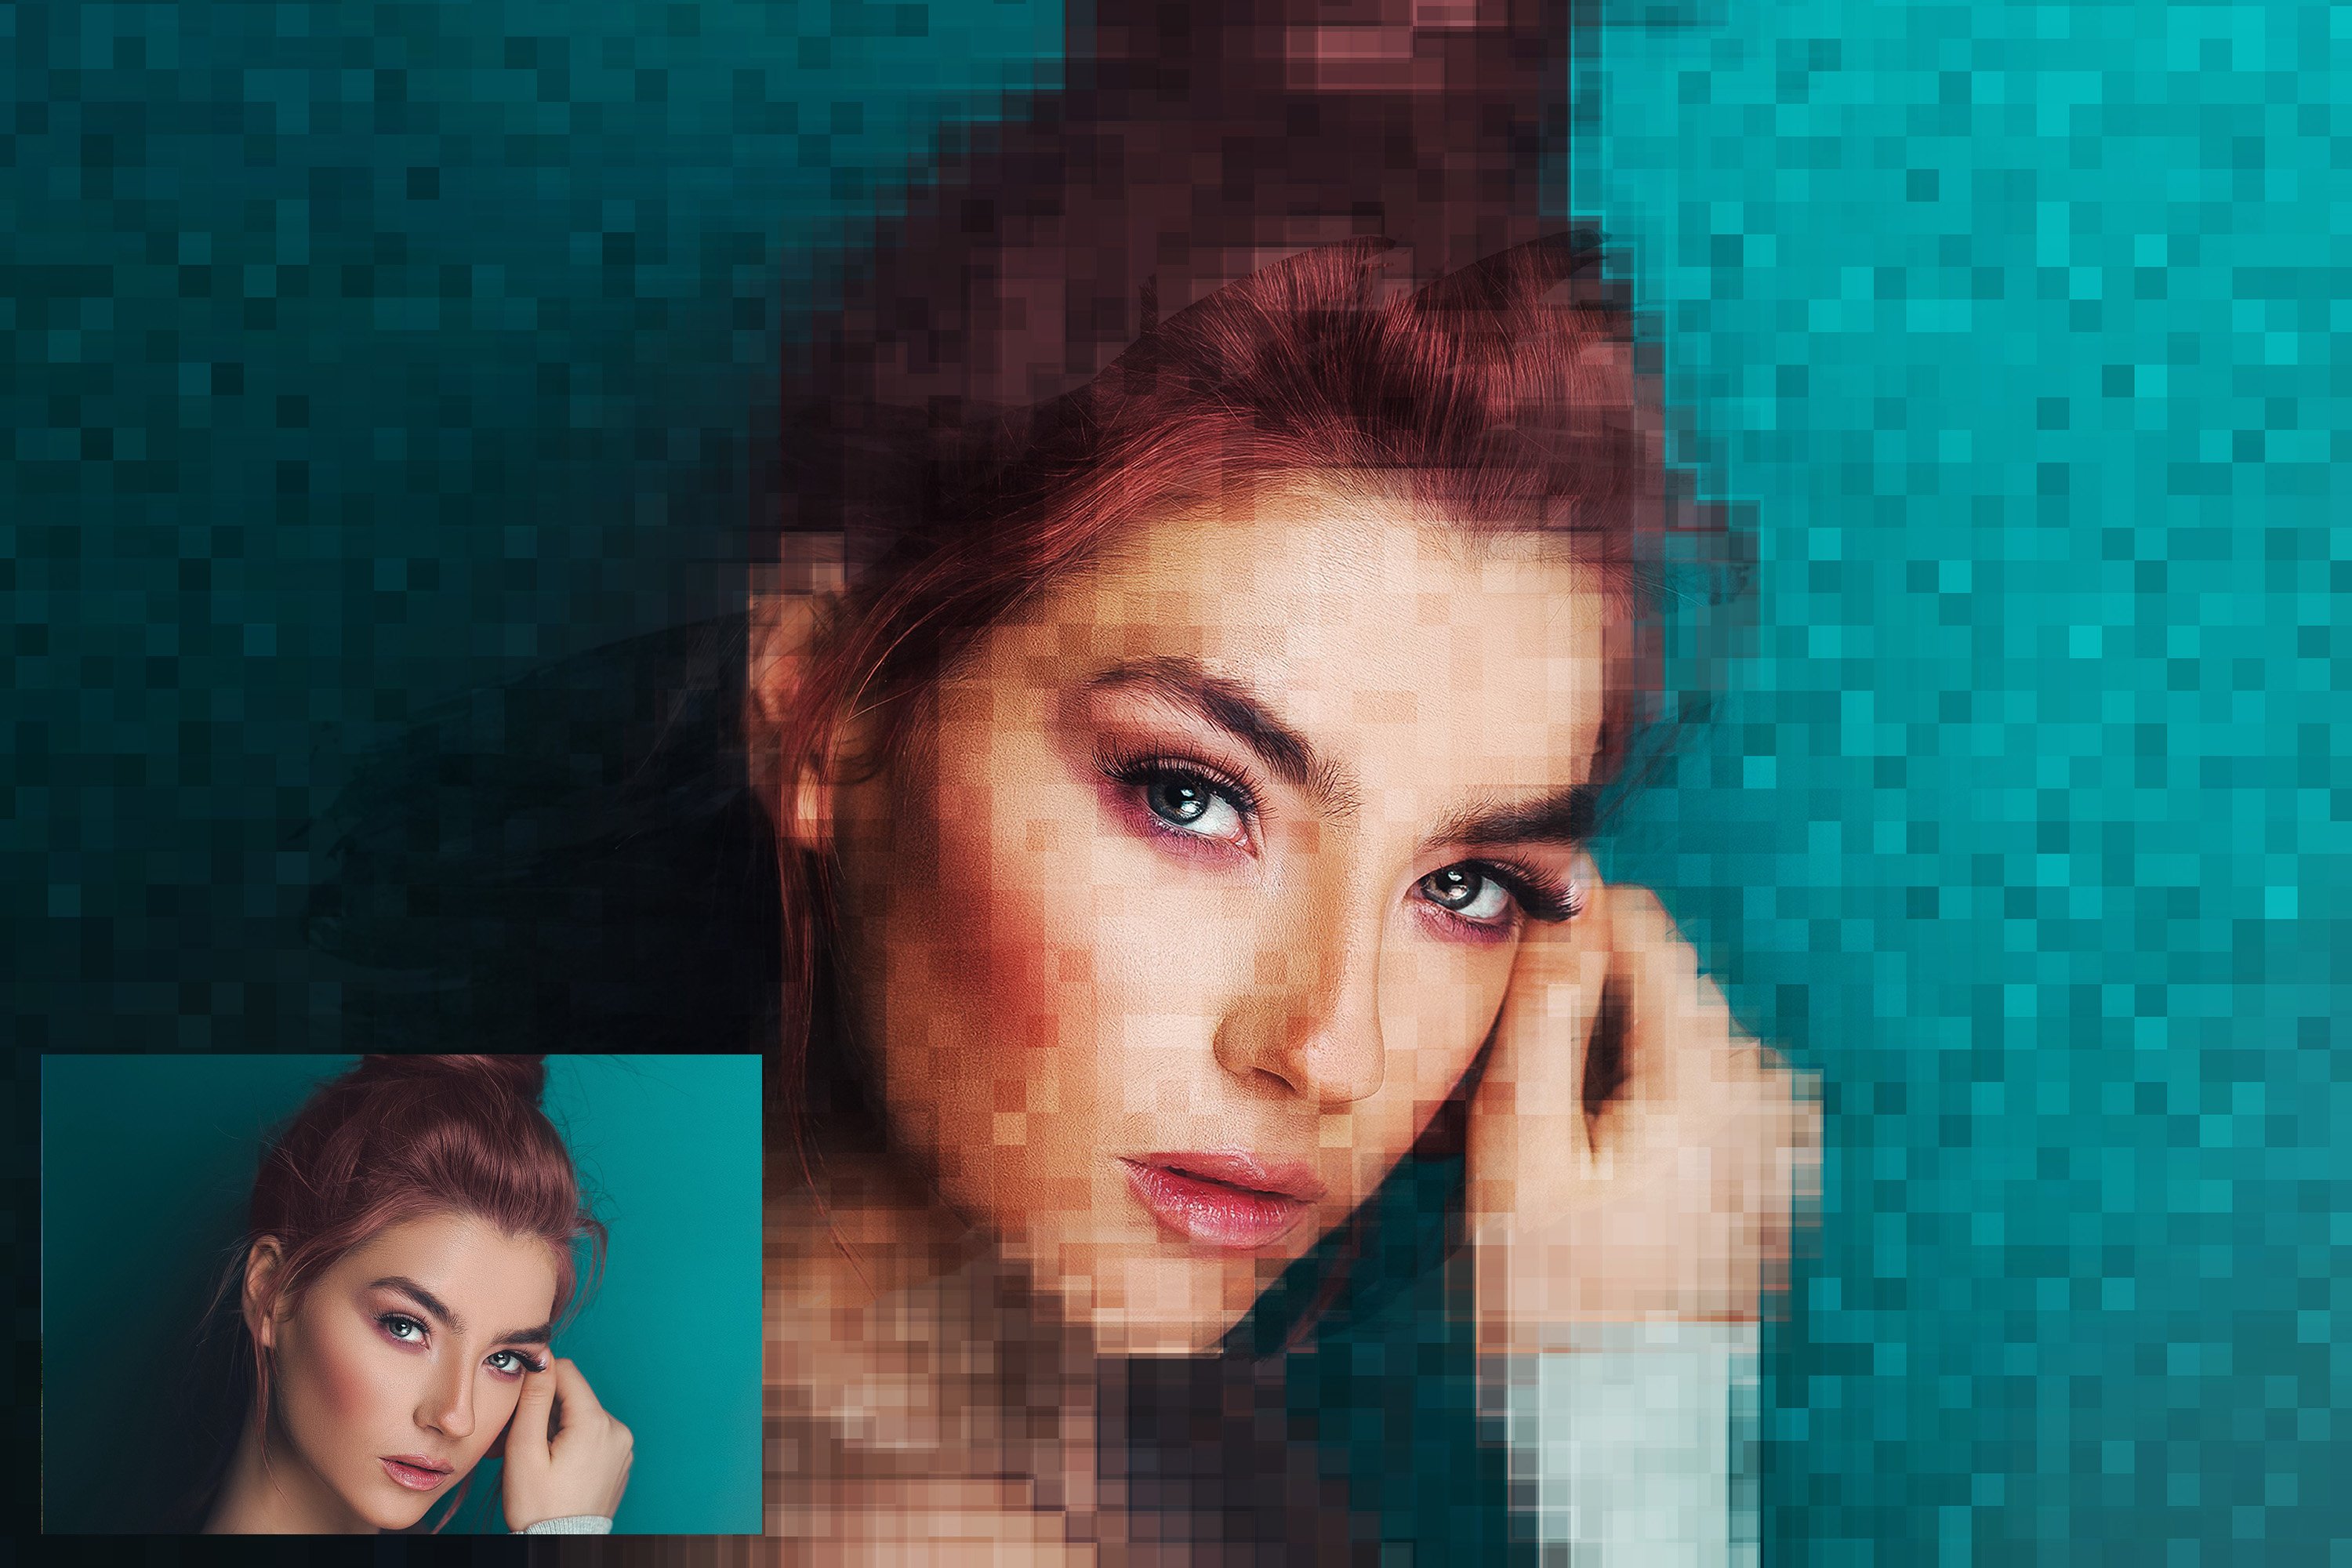 Pixel Art Effect Photoshoppreview image.